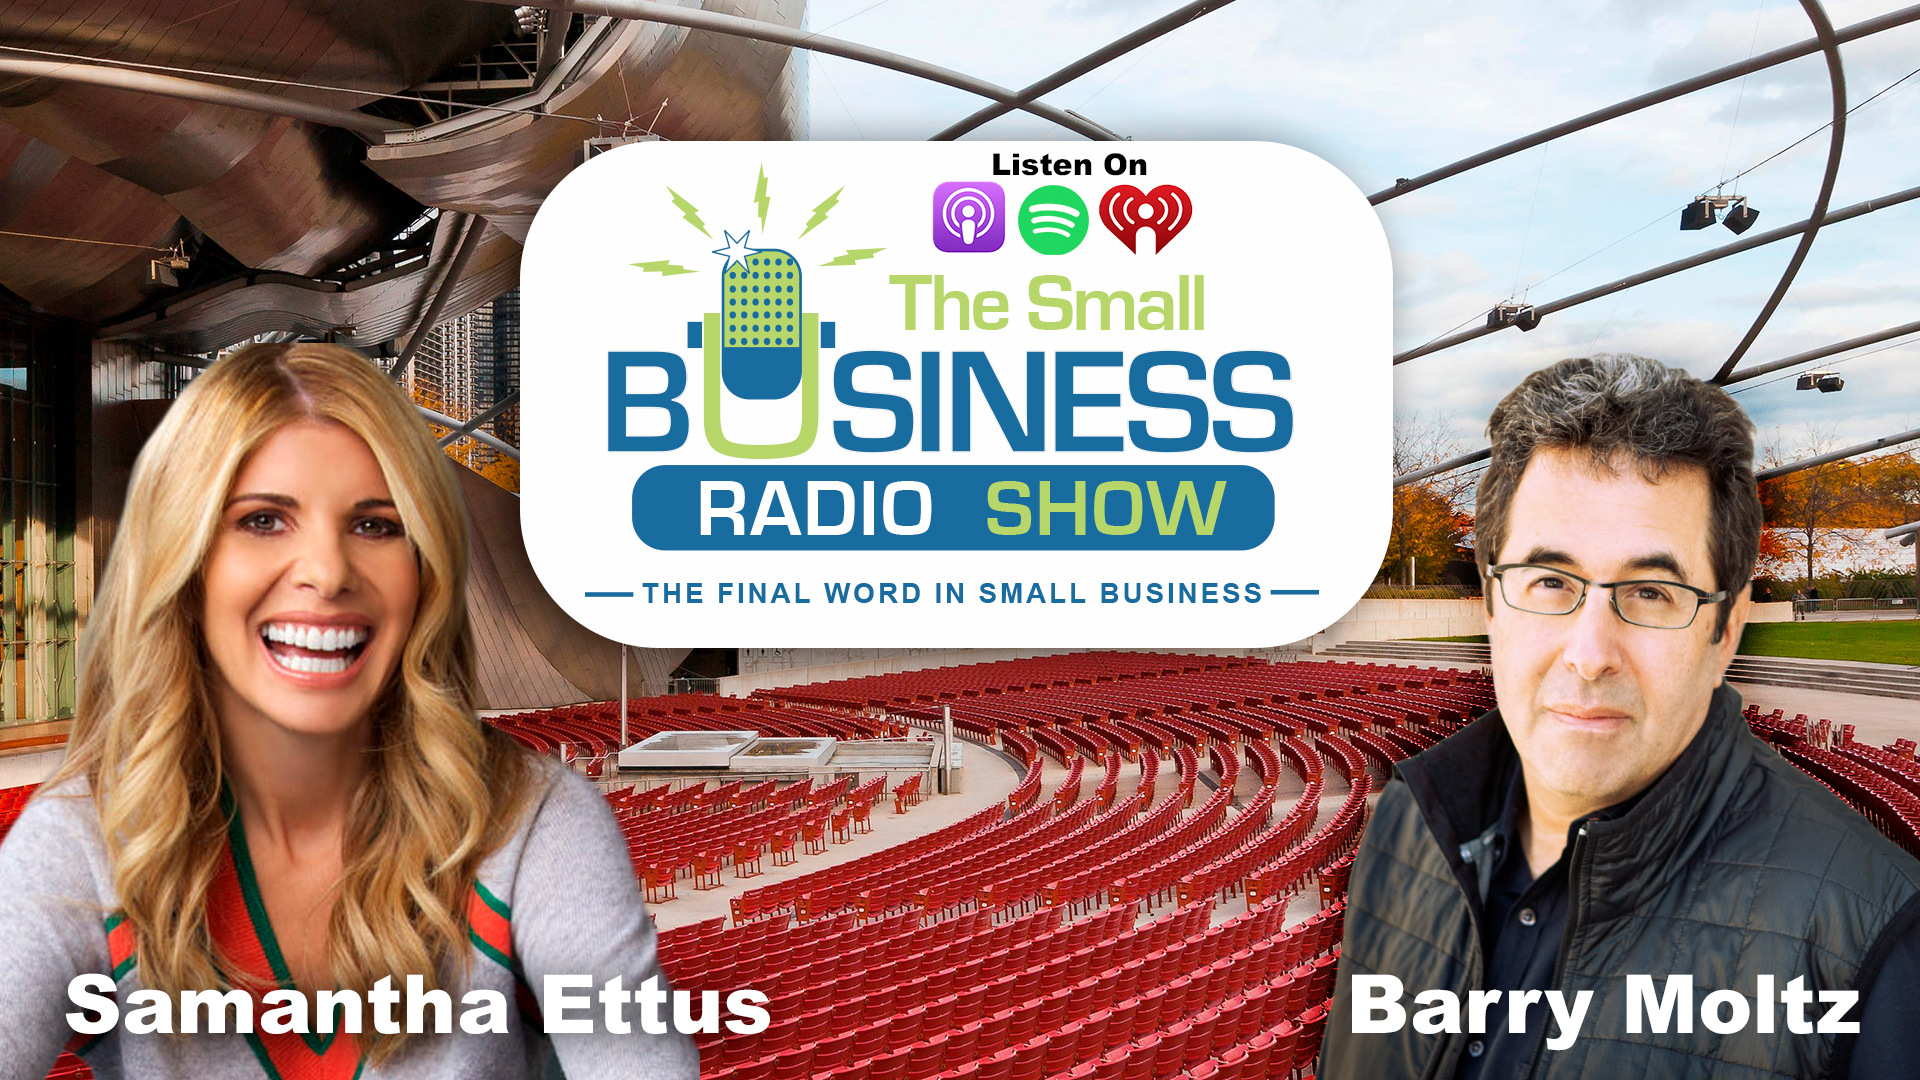 Samantha Ettus on The Small Business Radio Show